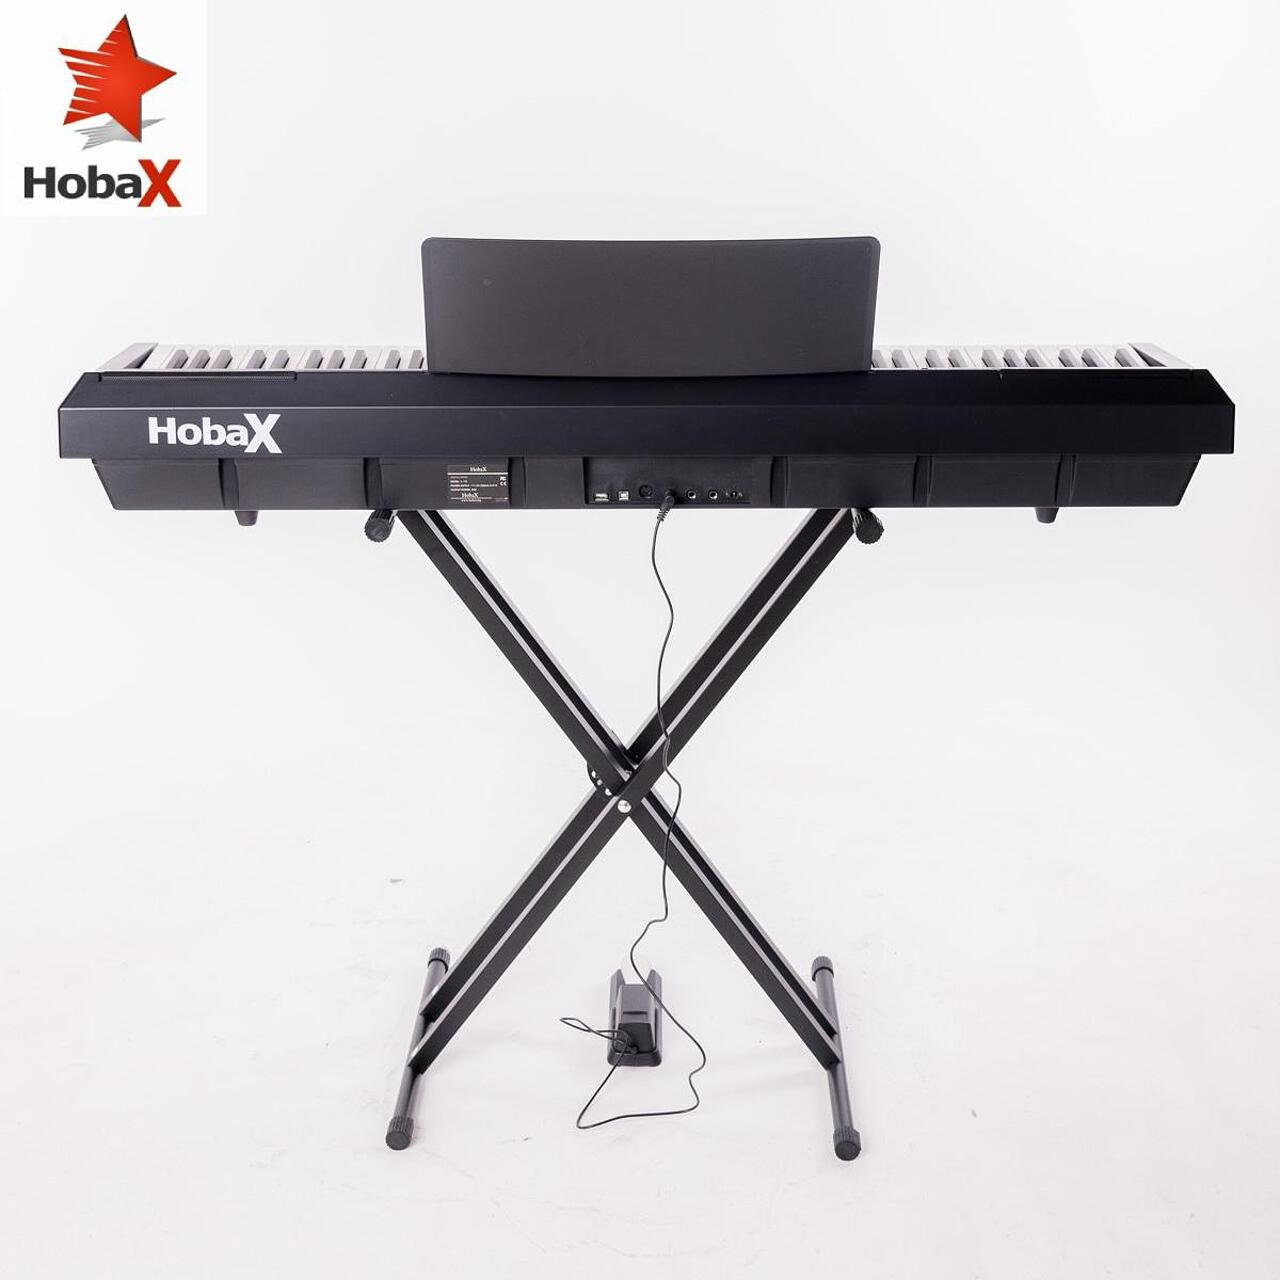 Комплект Пиано HOBAX S-192, 88 клавиша, HAMMER ACTION тежка клавиатура 7 октави, 8 звуци, 128 ритми, стойка за ноти, SUSTAIN педал + 3 ПОДАРЪКА - слушалки, стикери за клавиши и х стойка